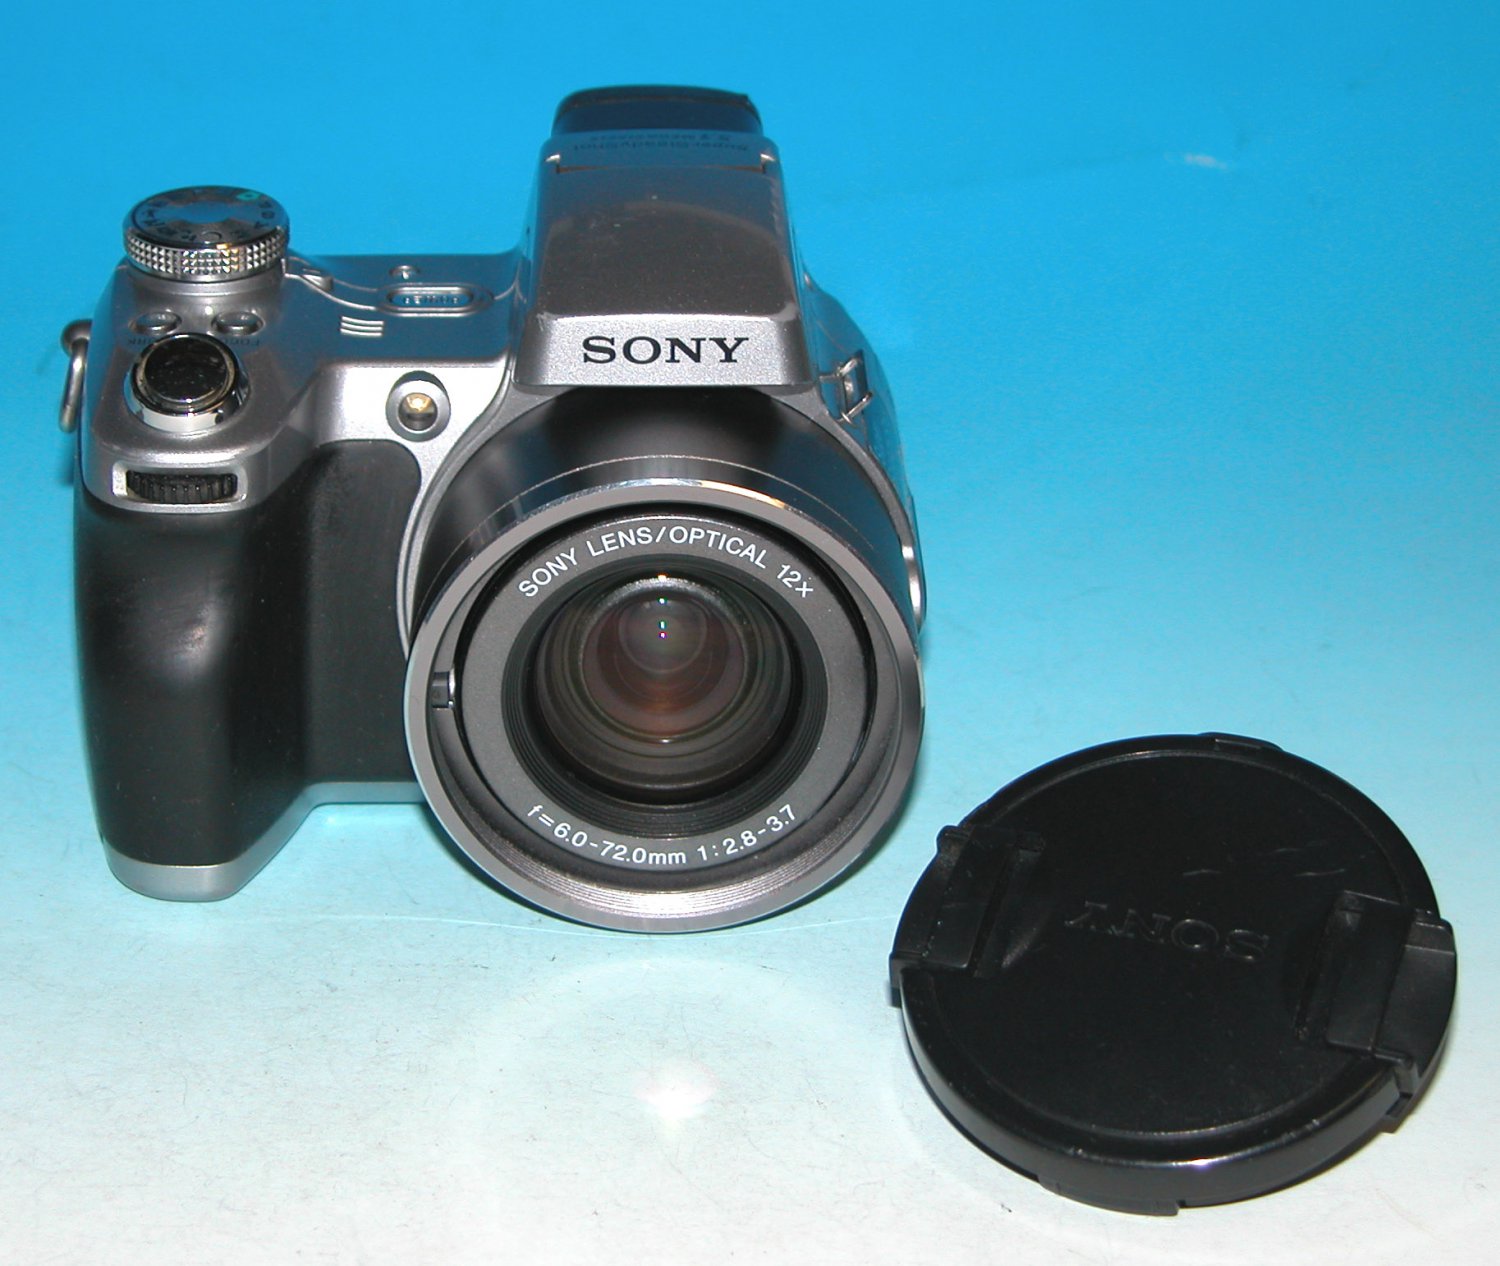 Sony Cyber-shot DSC-H1 5.0MP Digital Camera - Silver #3008